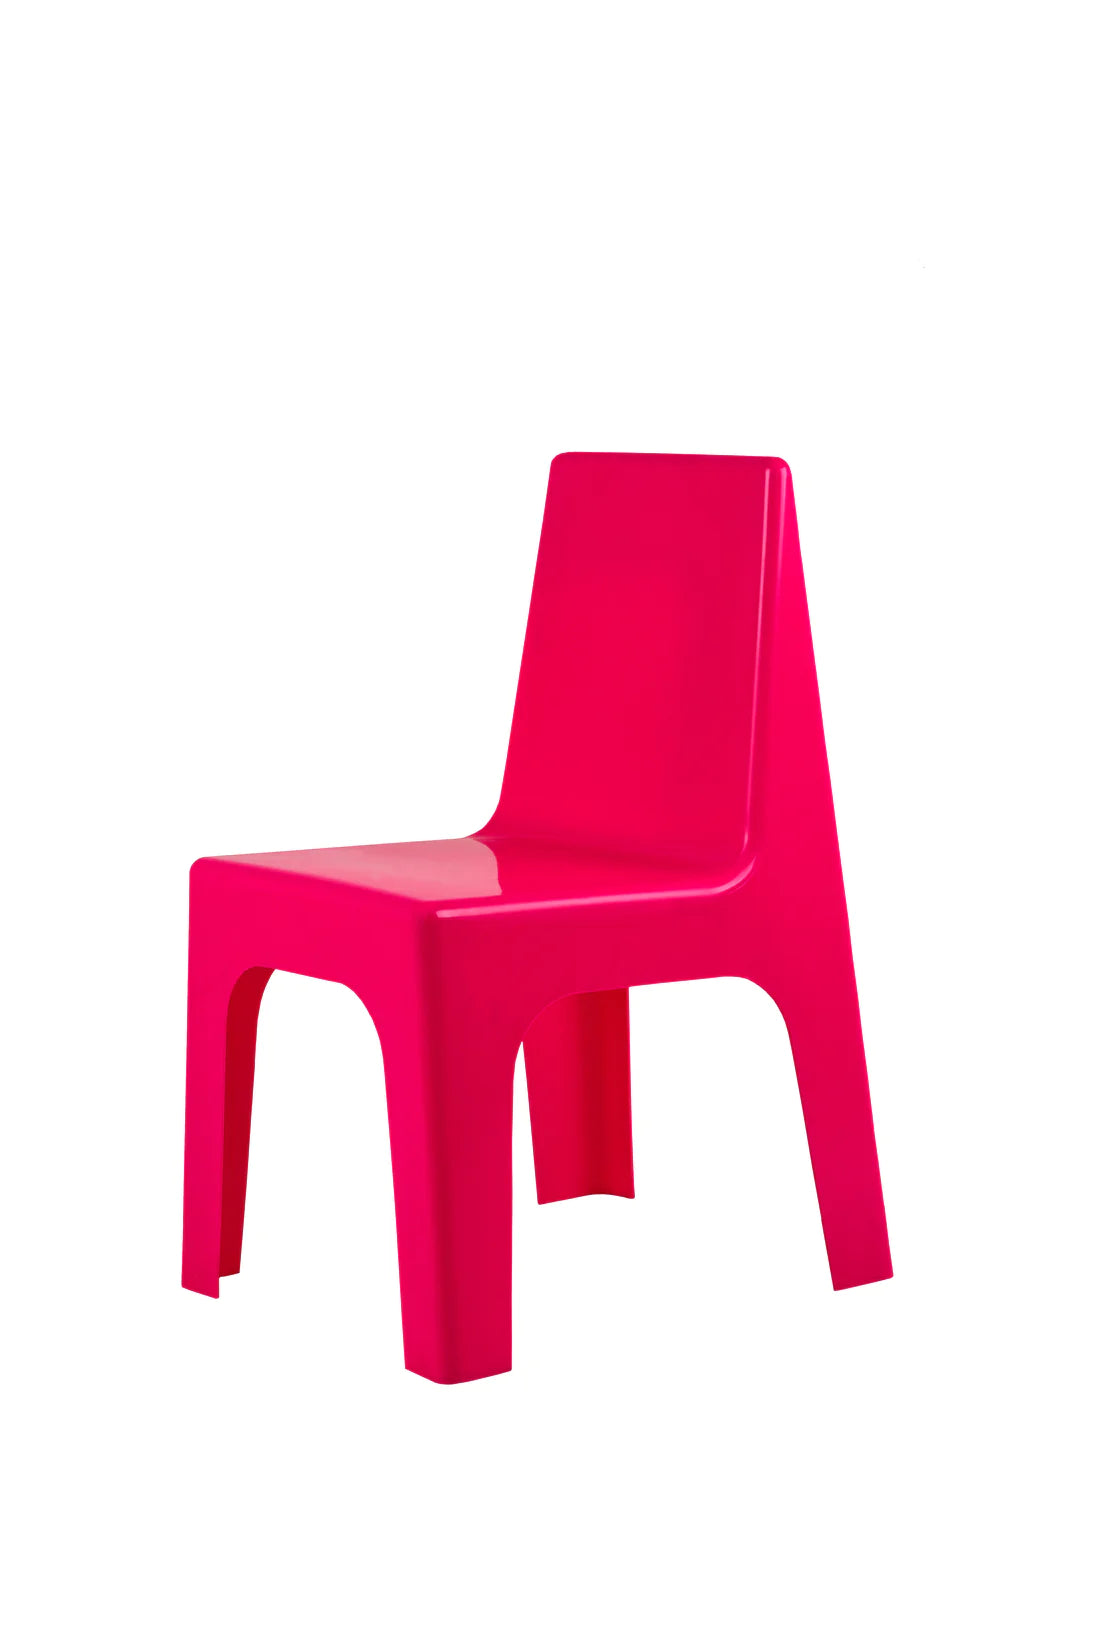 Jolly Kiddies Chair Plastic